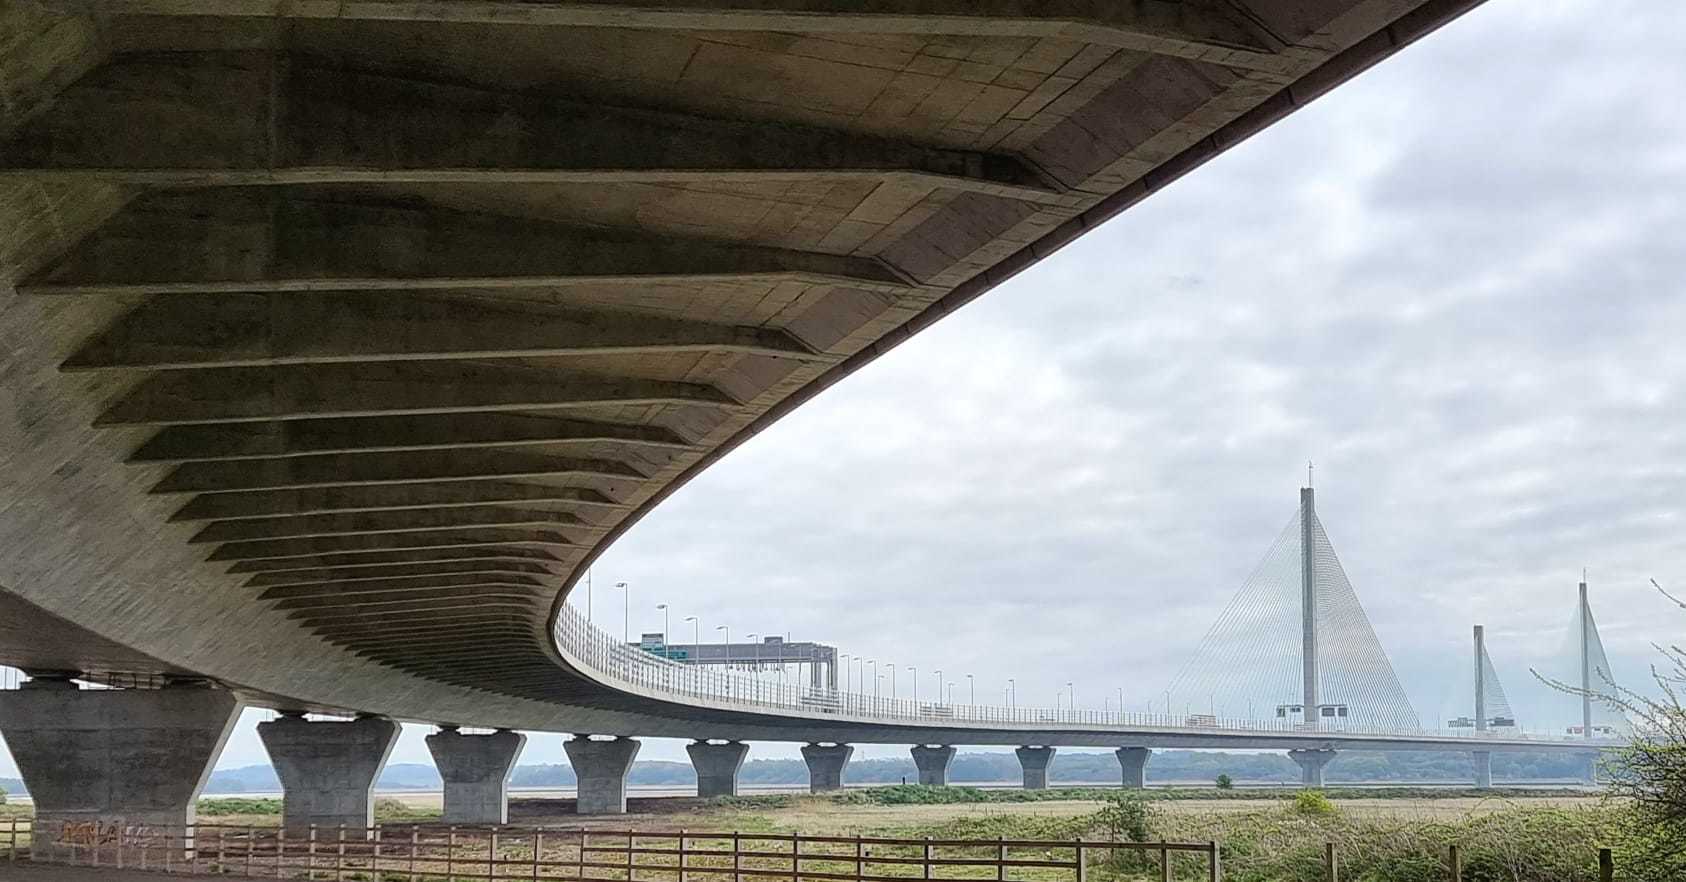 The Mersey Gateway Bridge by Suzy Makin